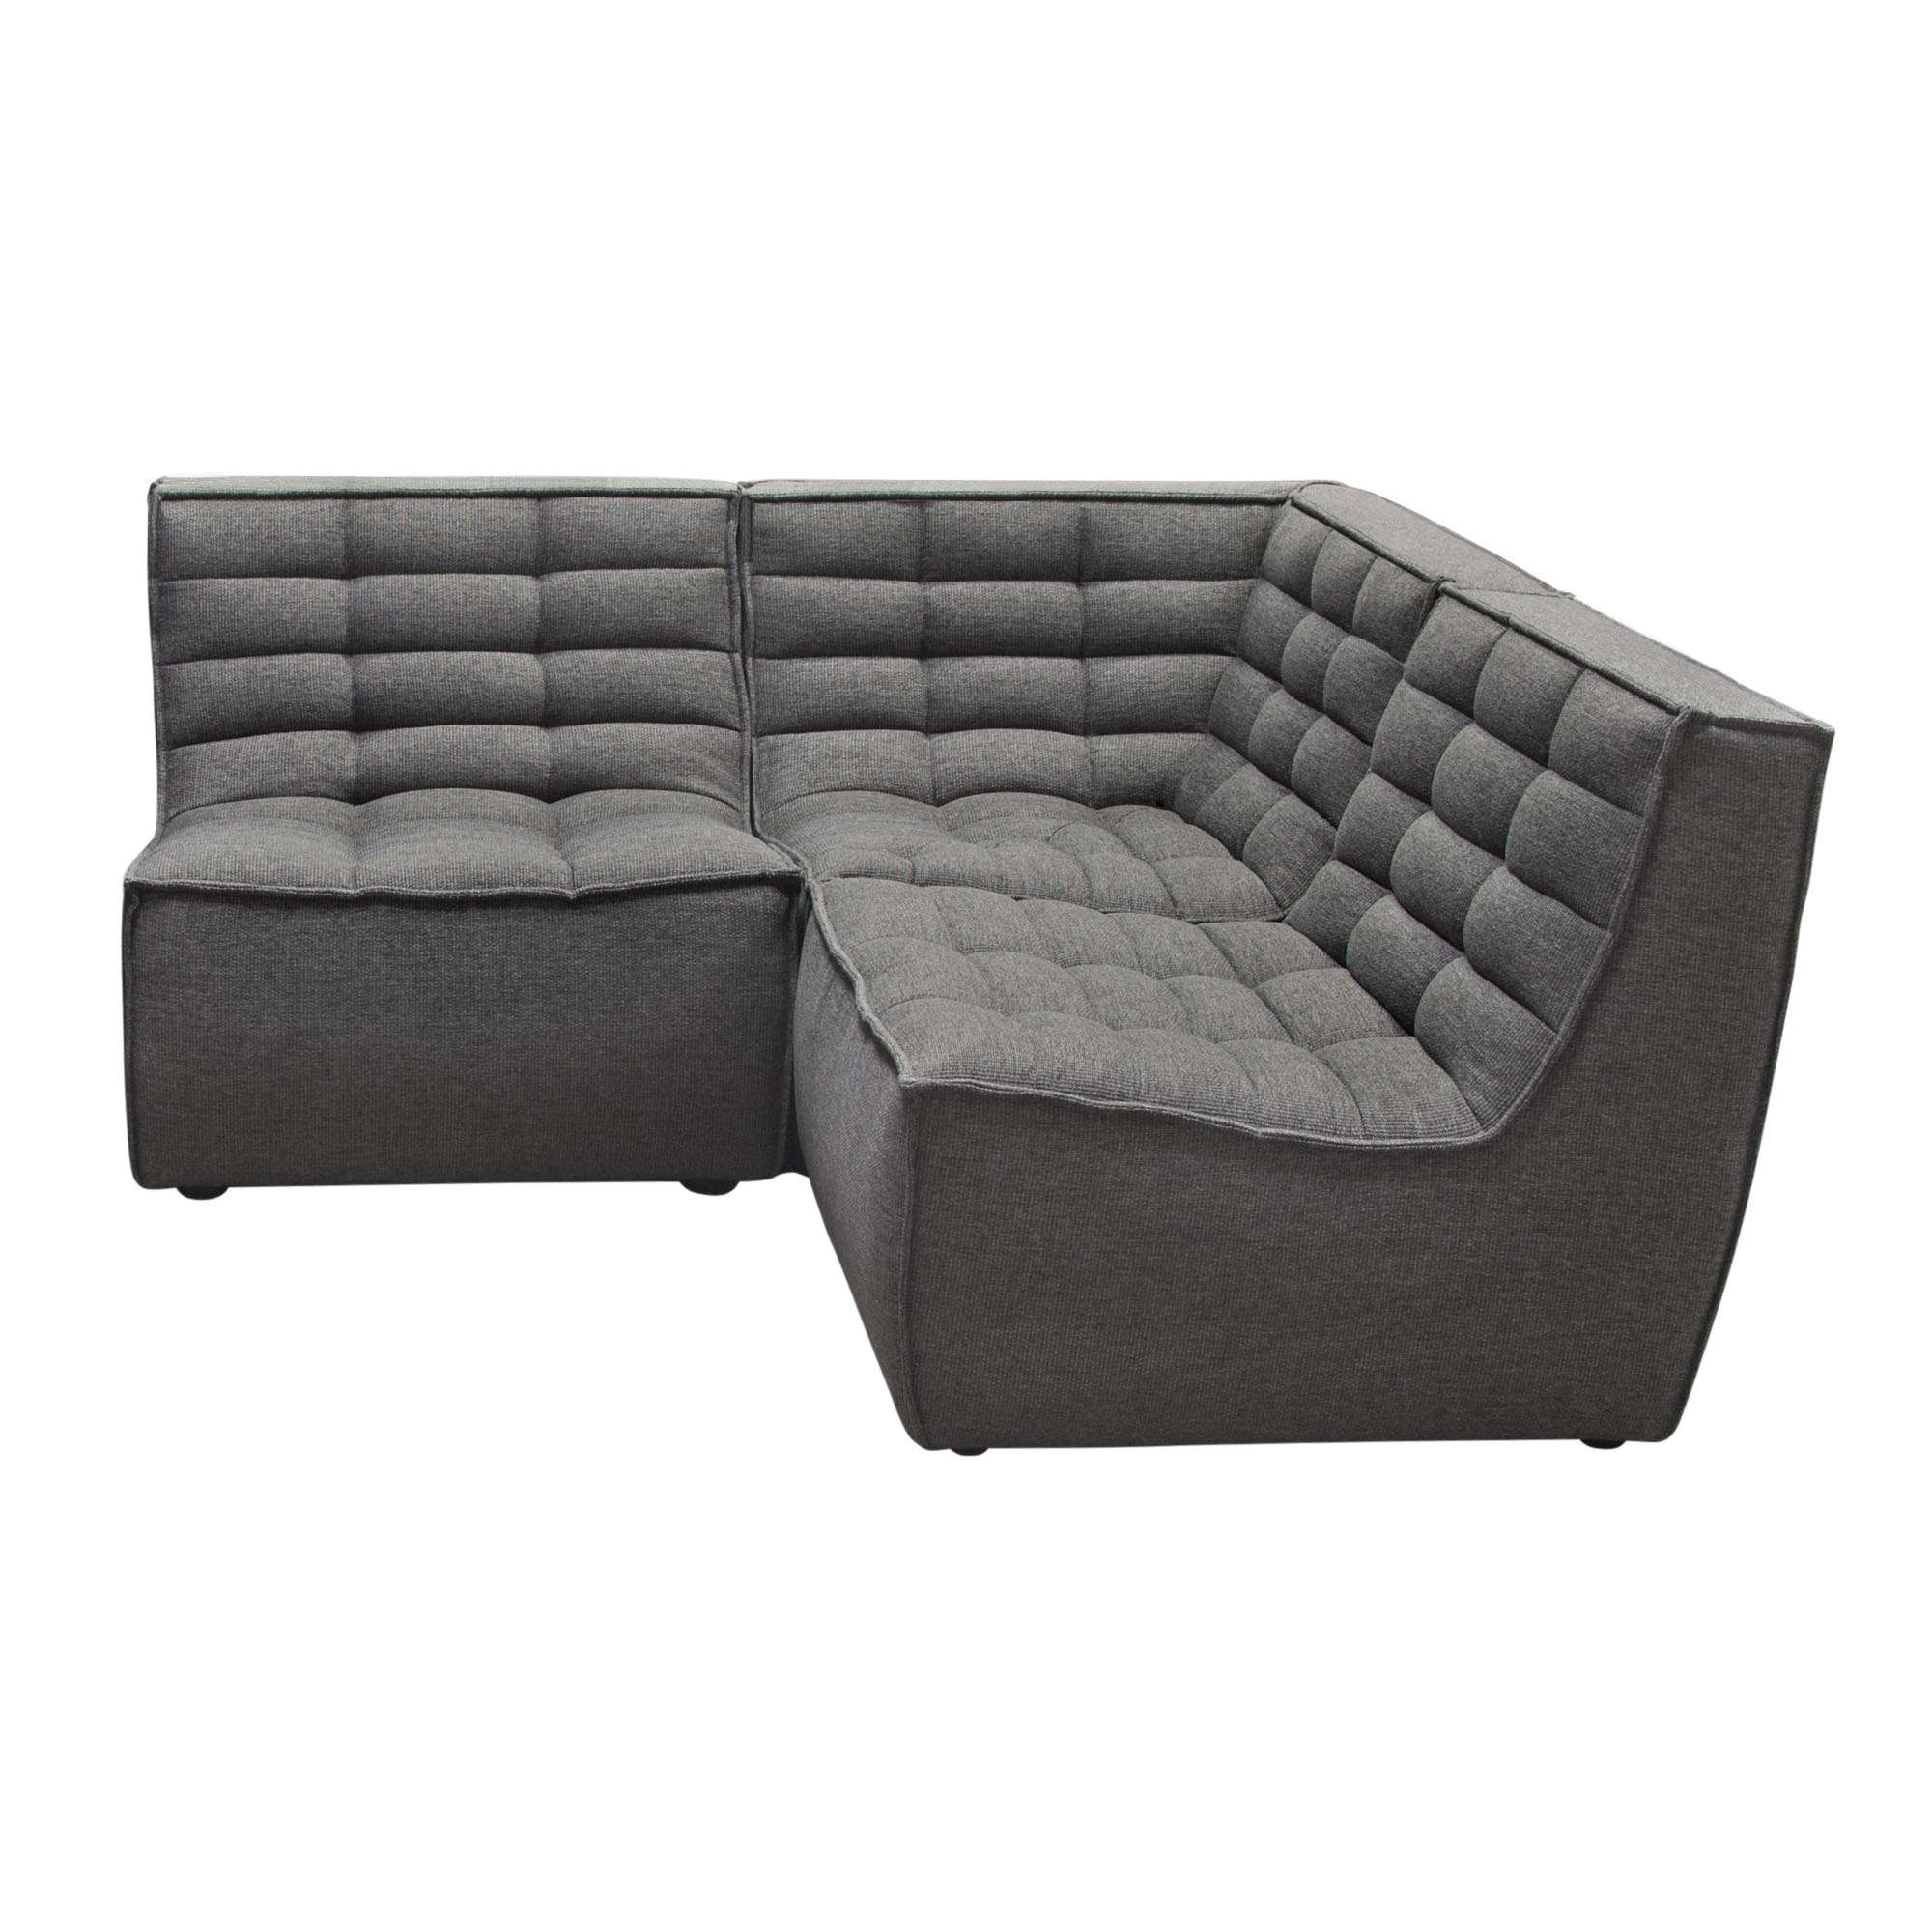 Marshall 3PC Corner Modular Sectional w/ Scooped Seat in Grey Fabric by Diamond Sofa - Decorian Group